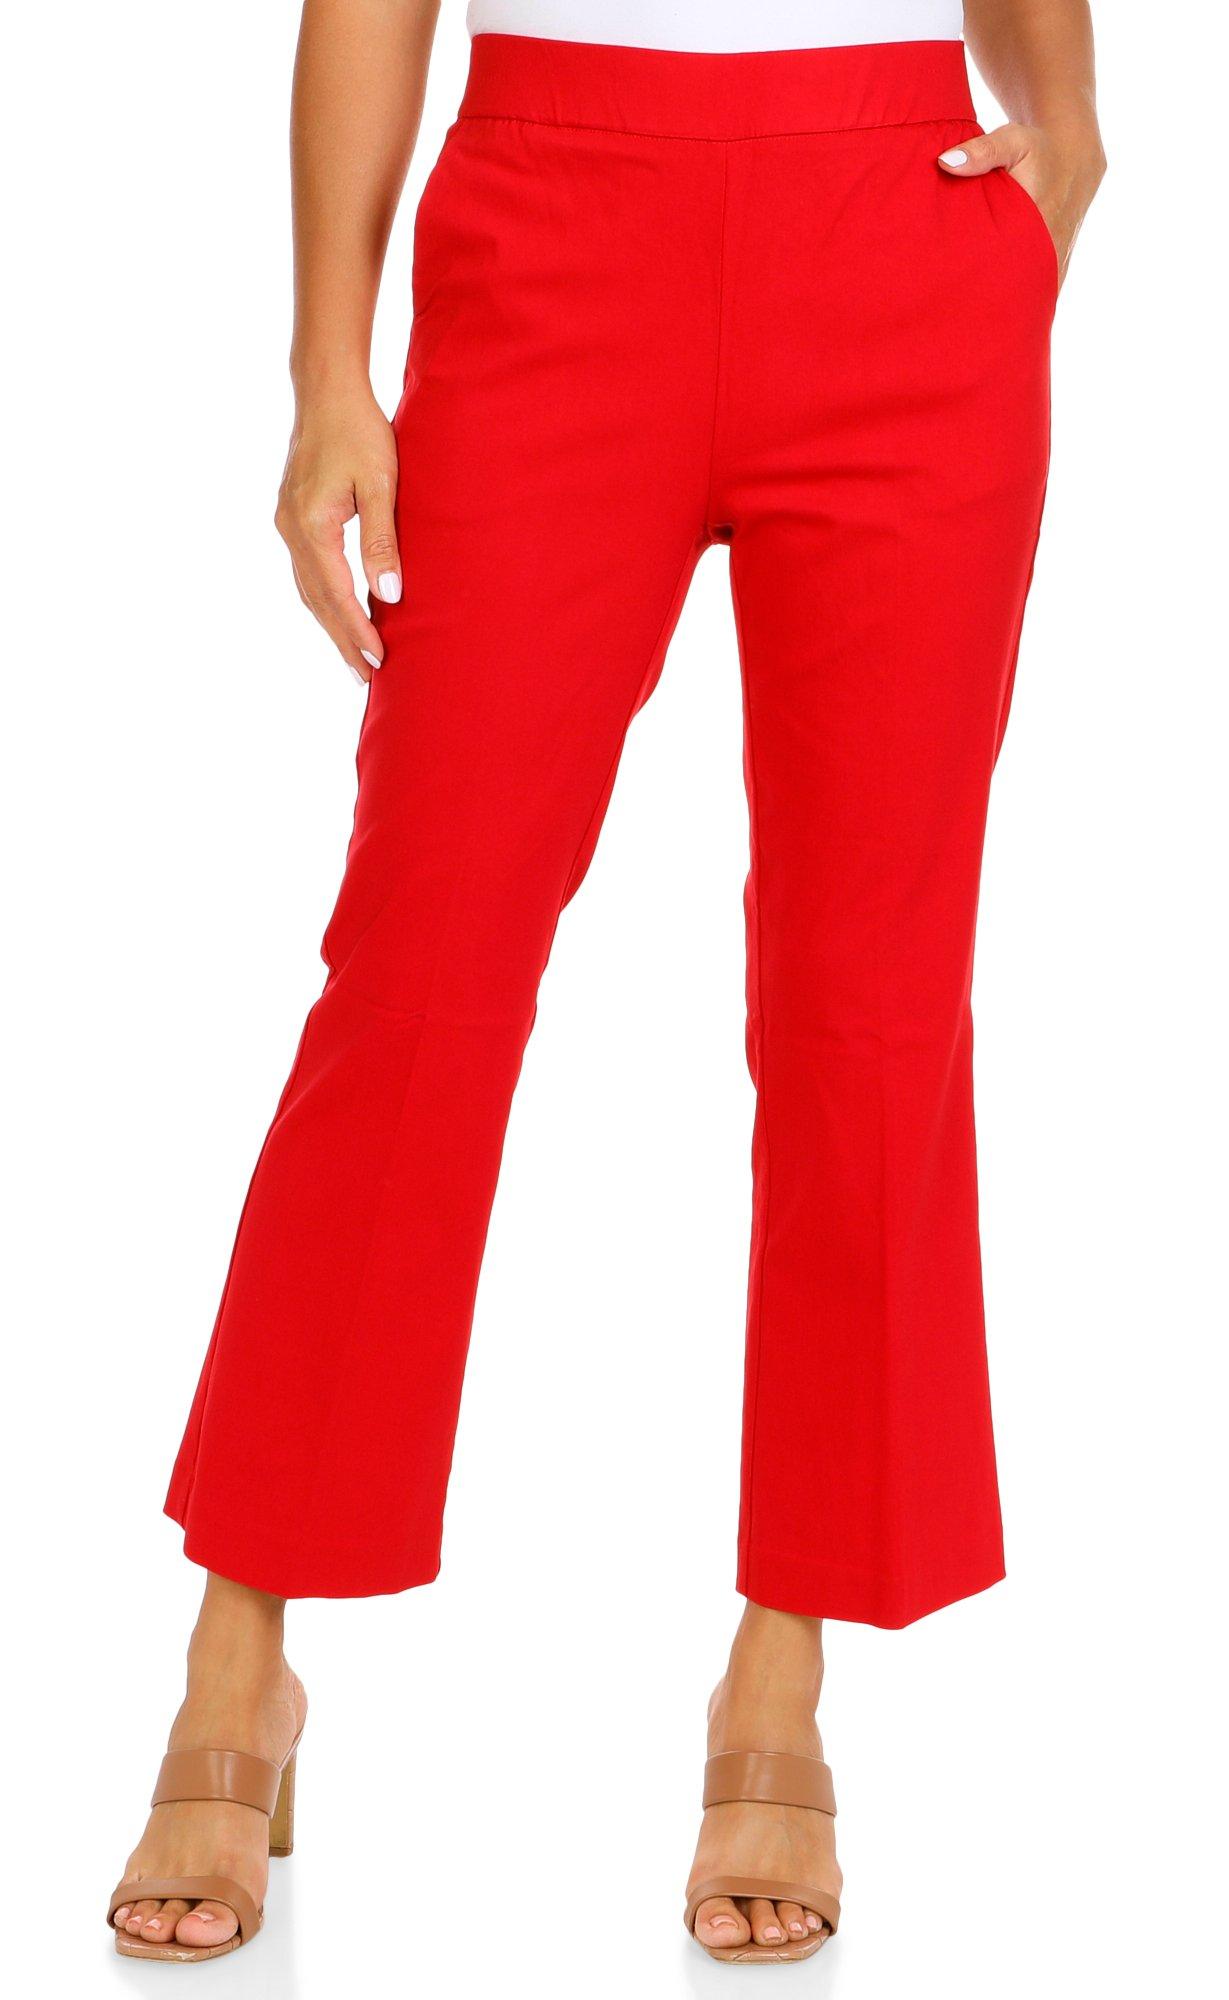 LEEy-World Pants for Women Women's High Elastic Waist Plaid Print Pants  Straight Leg Stretch Pants Trousers White,XL 